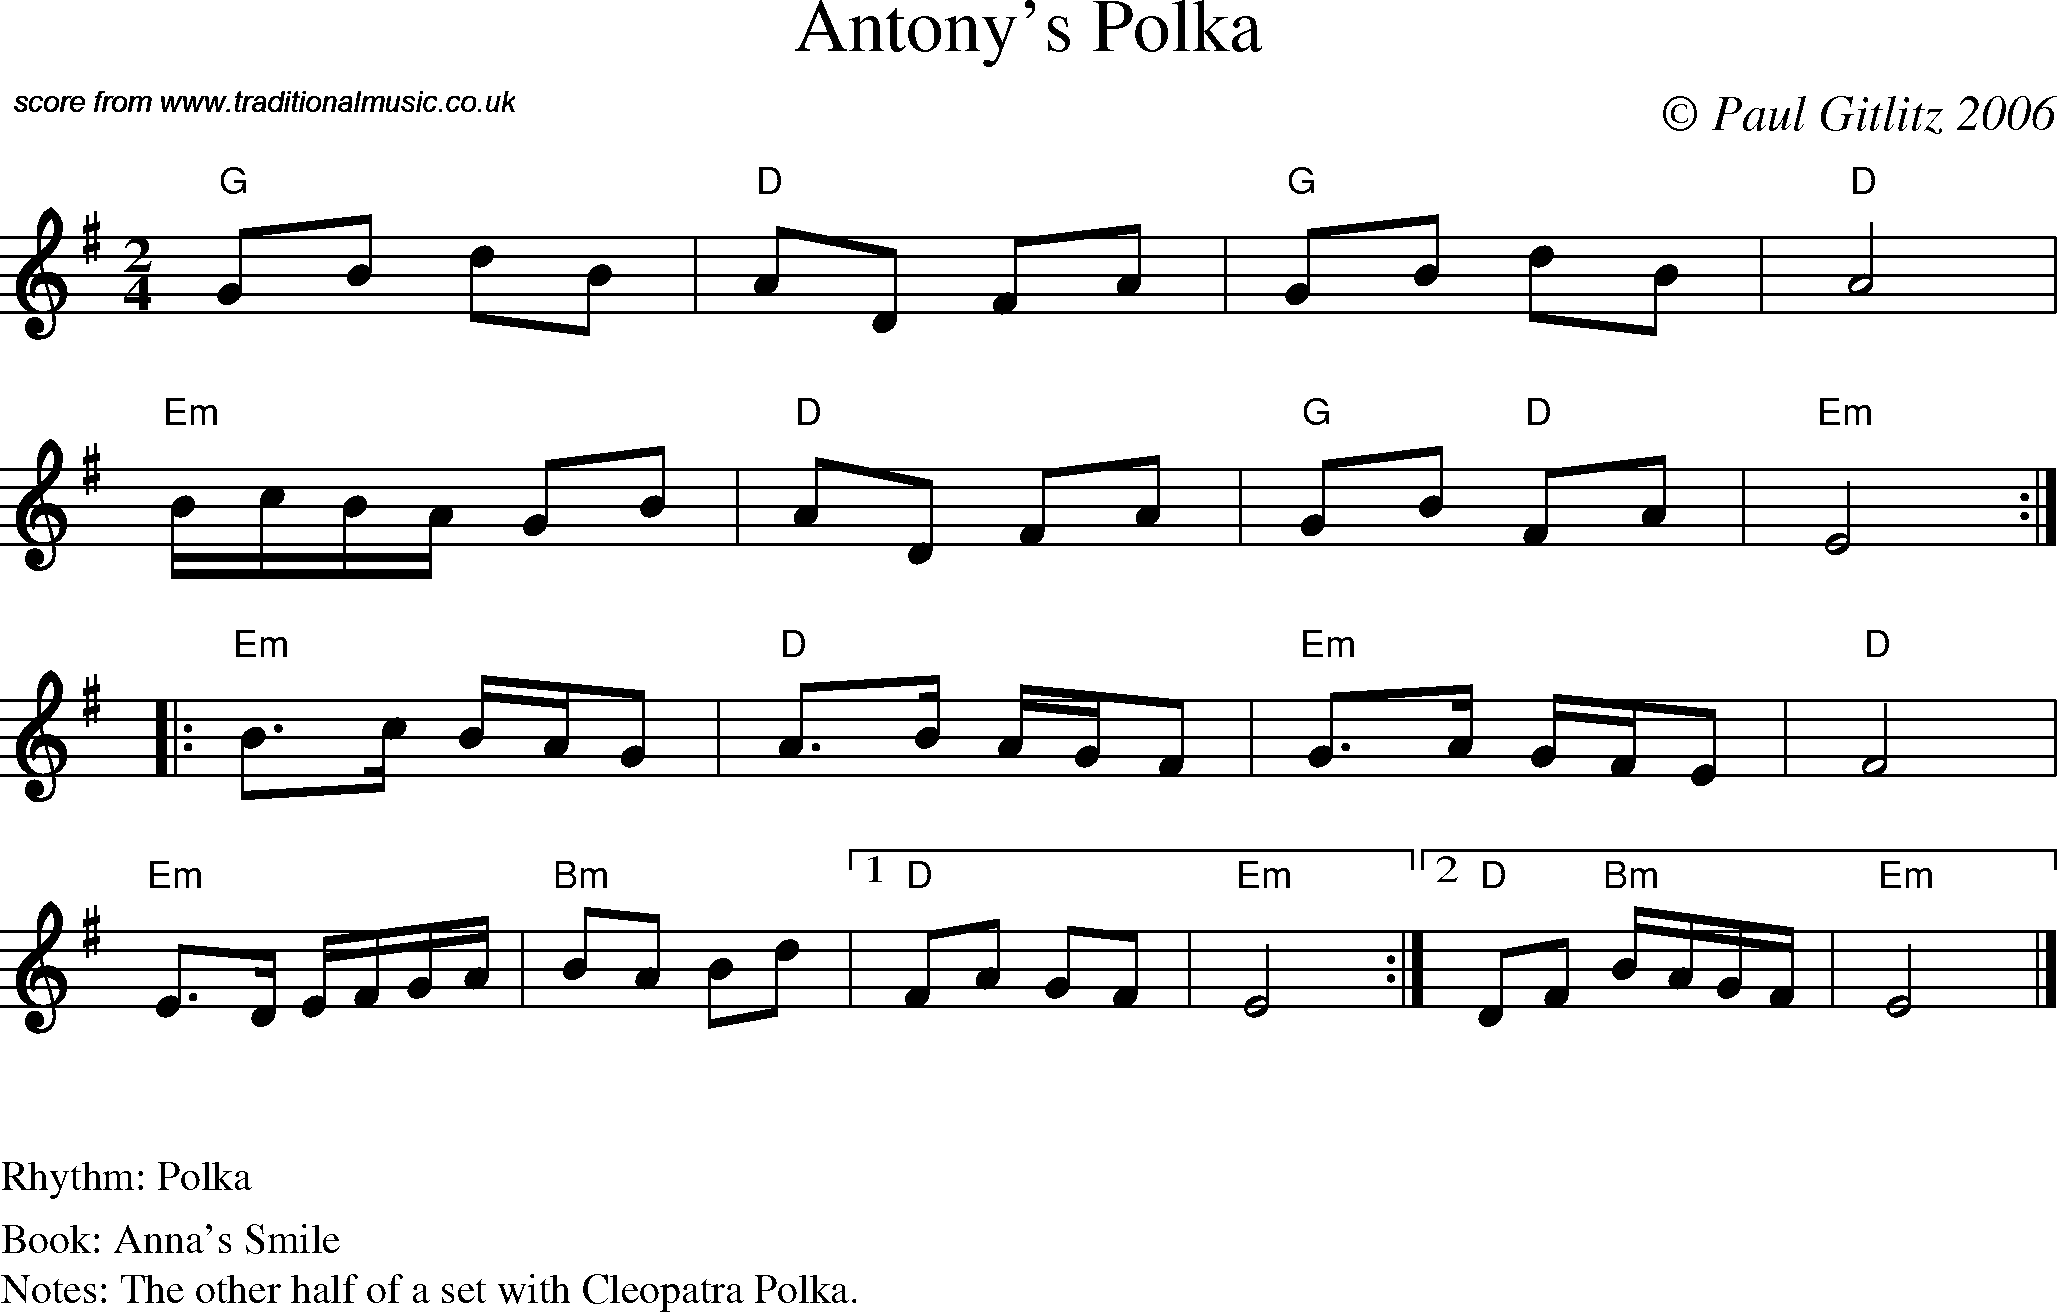 Sheet Music Score for Polka - Antony's Polka